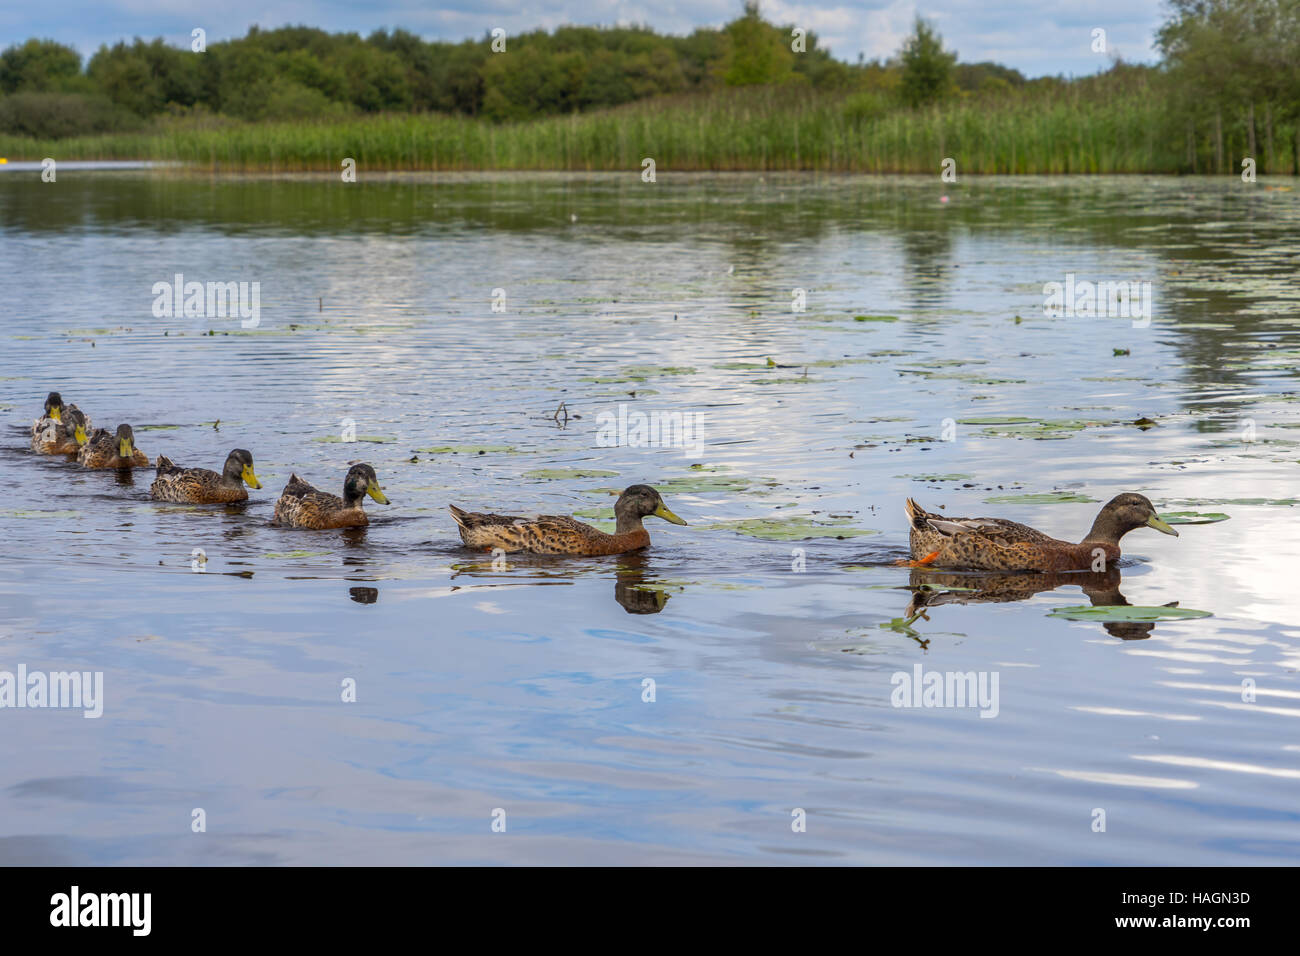 Ducks in a row. Stock Photo